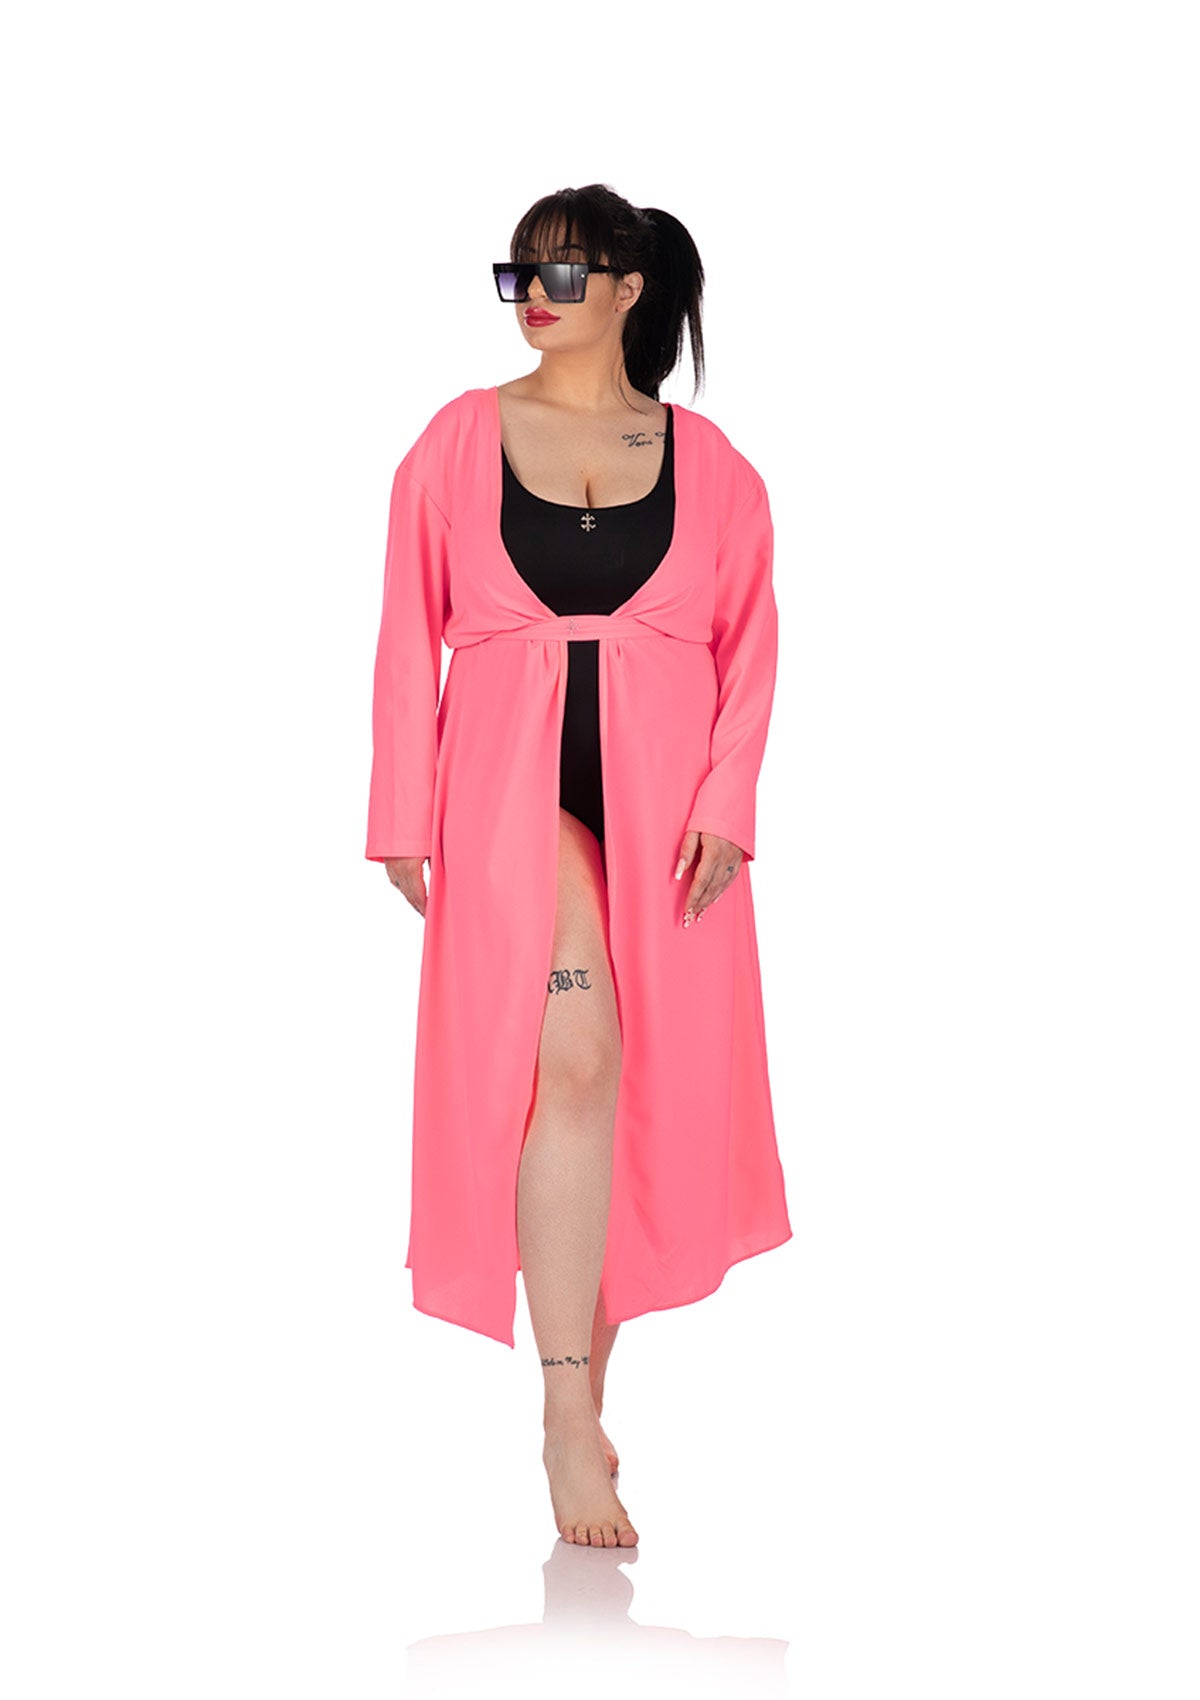 Розов халат KORAL роба кимоно стил комфортен халат